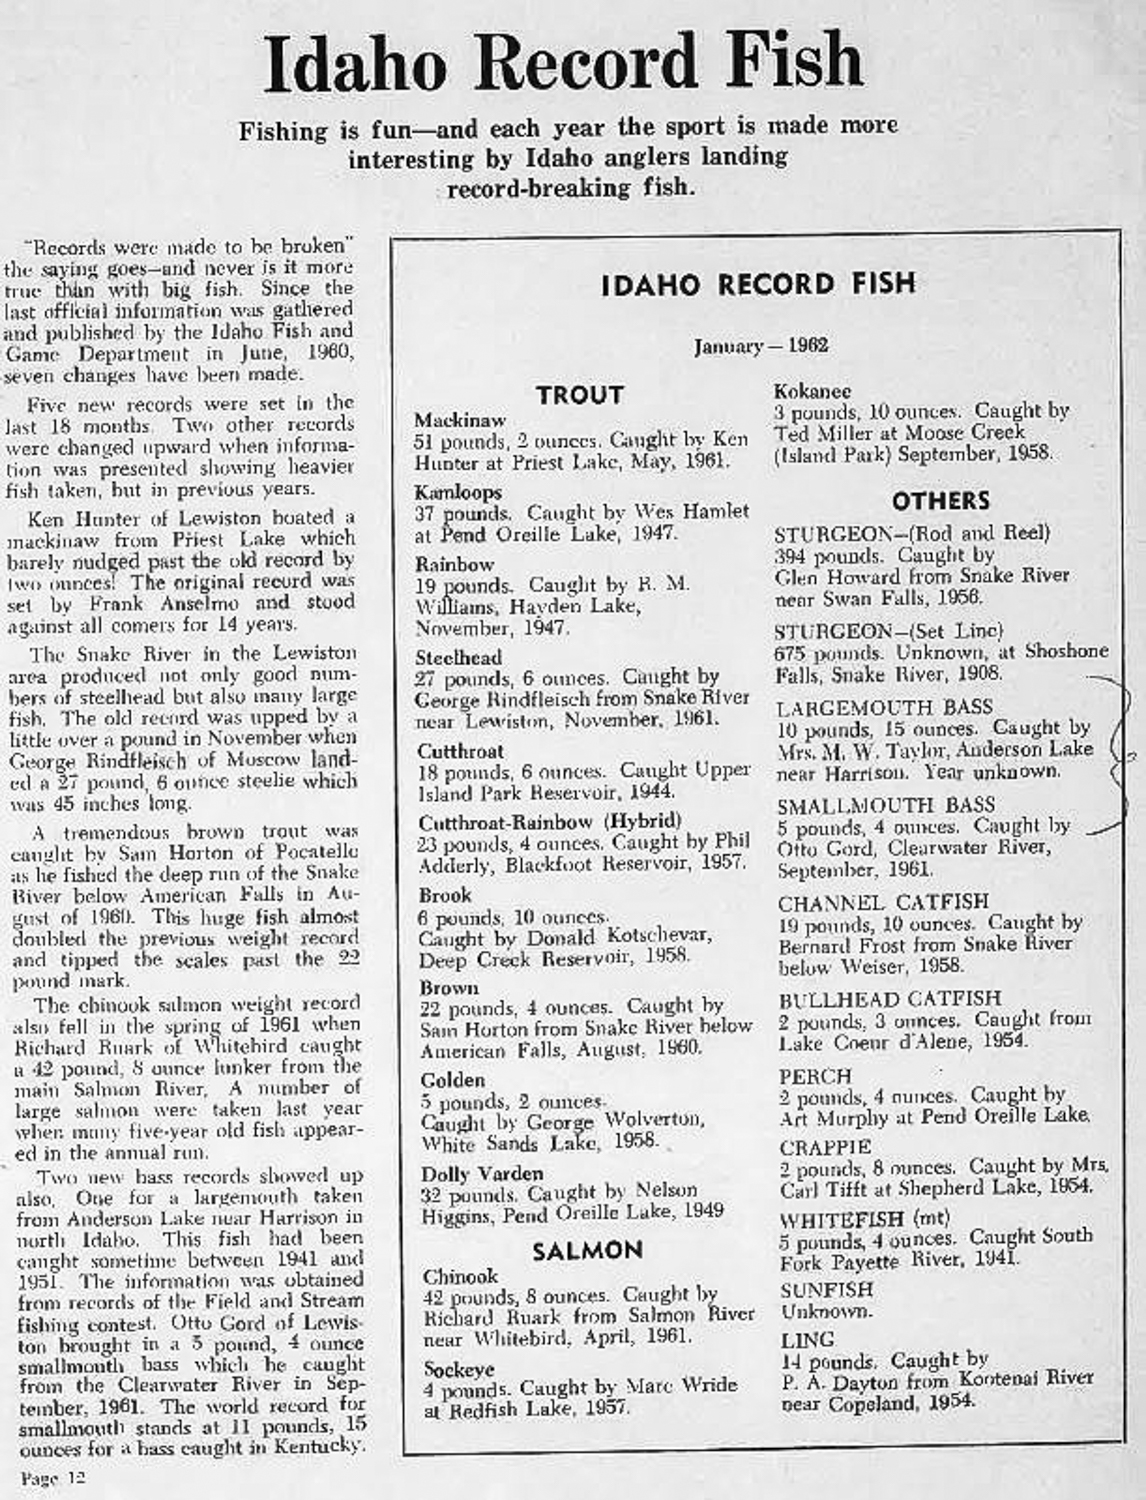 List of record fish from Idaho 1962